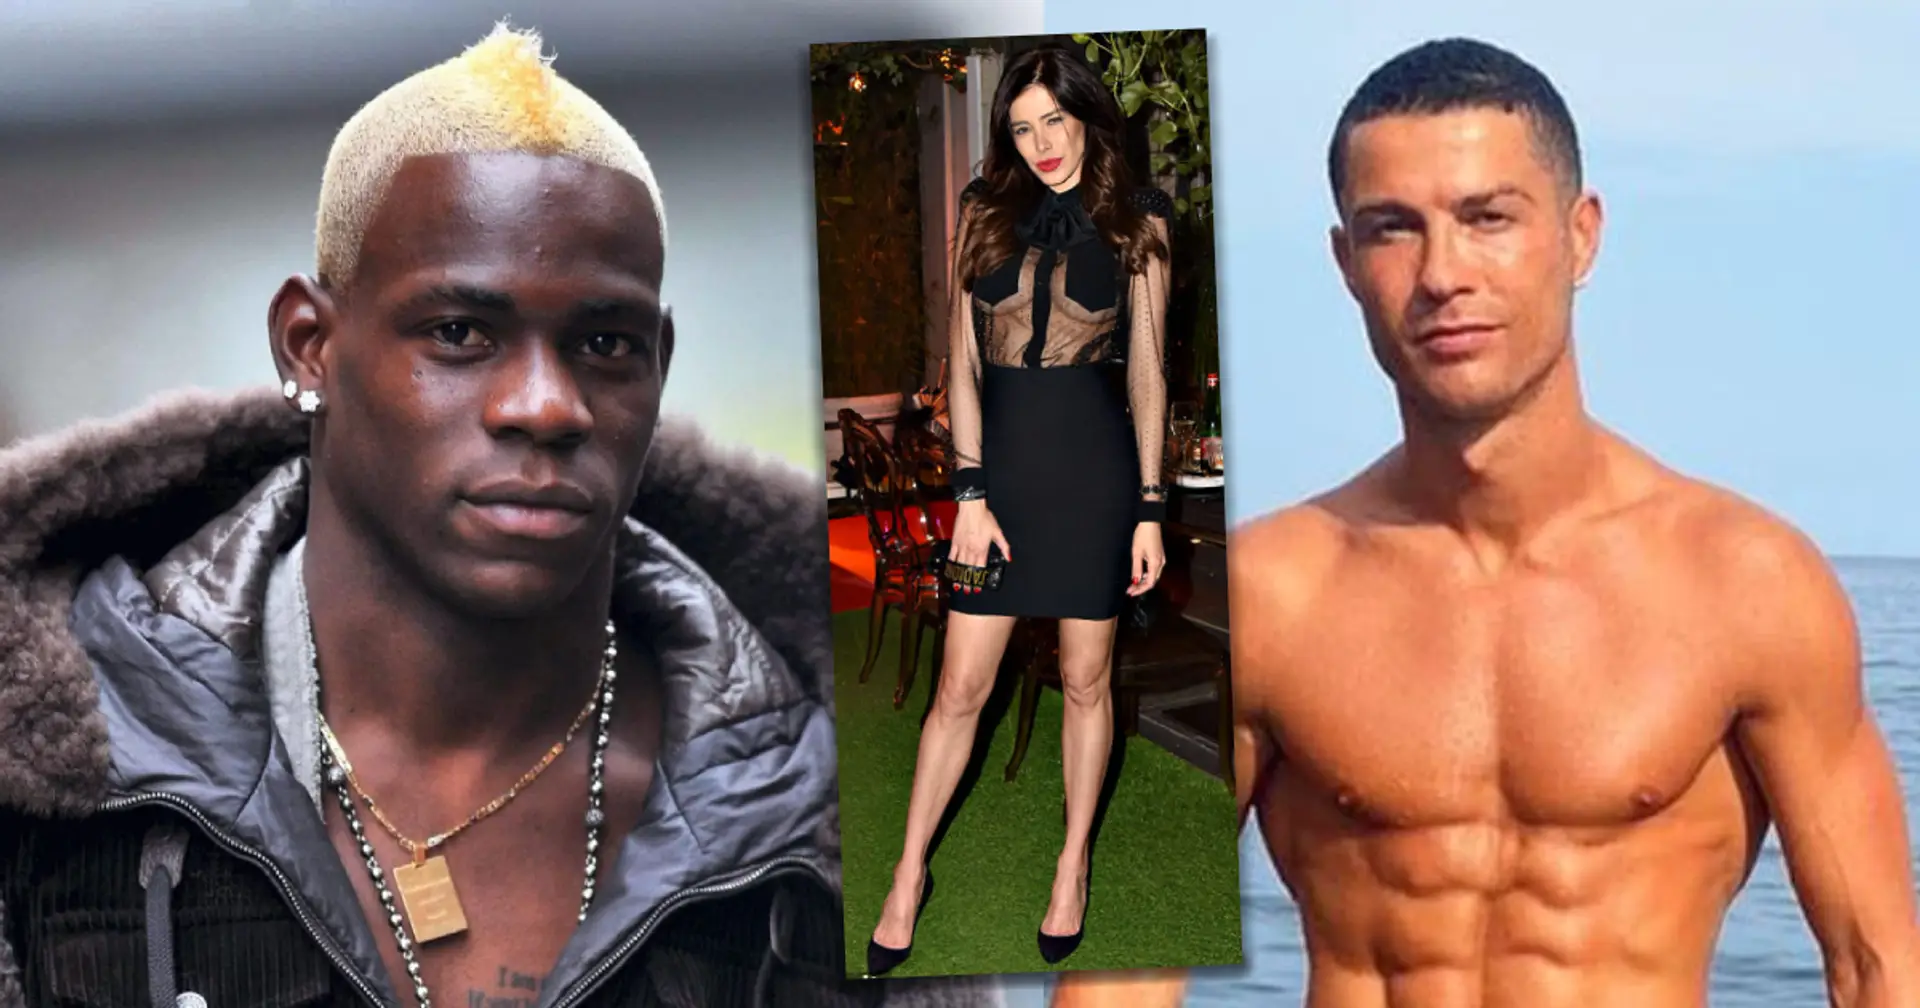 Mario Balotelli allegedly dated both Cristiano Ronaldo and Wayne Rooney's ex-girlfriends